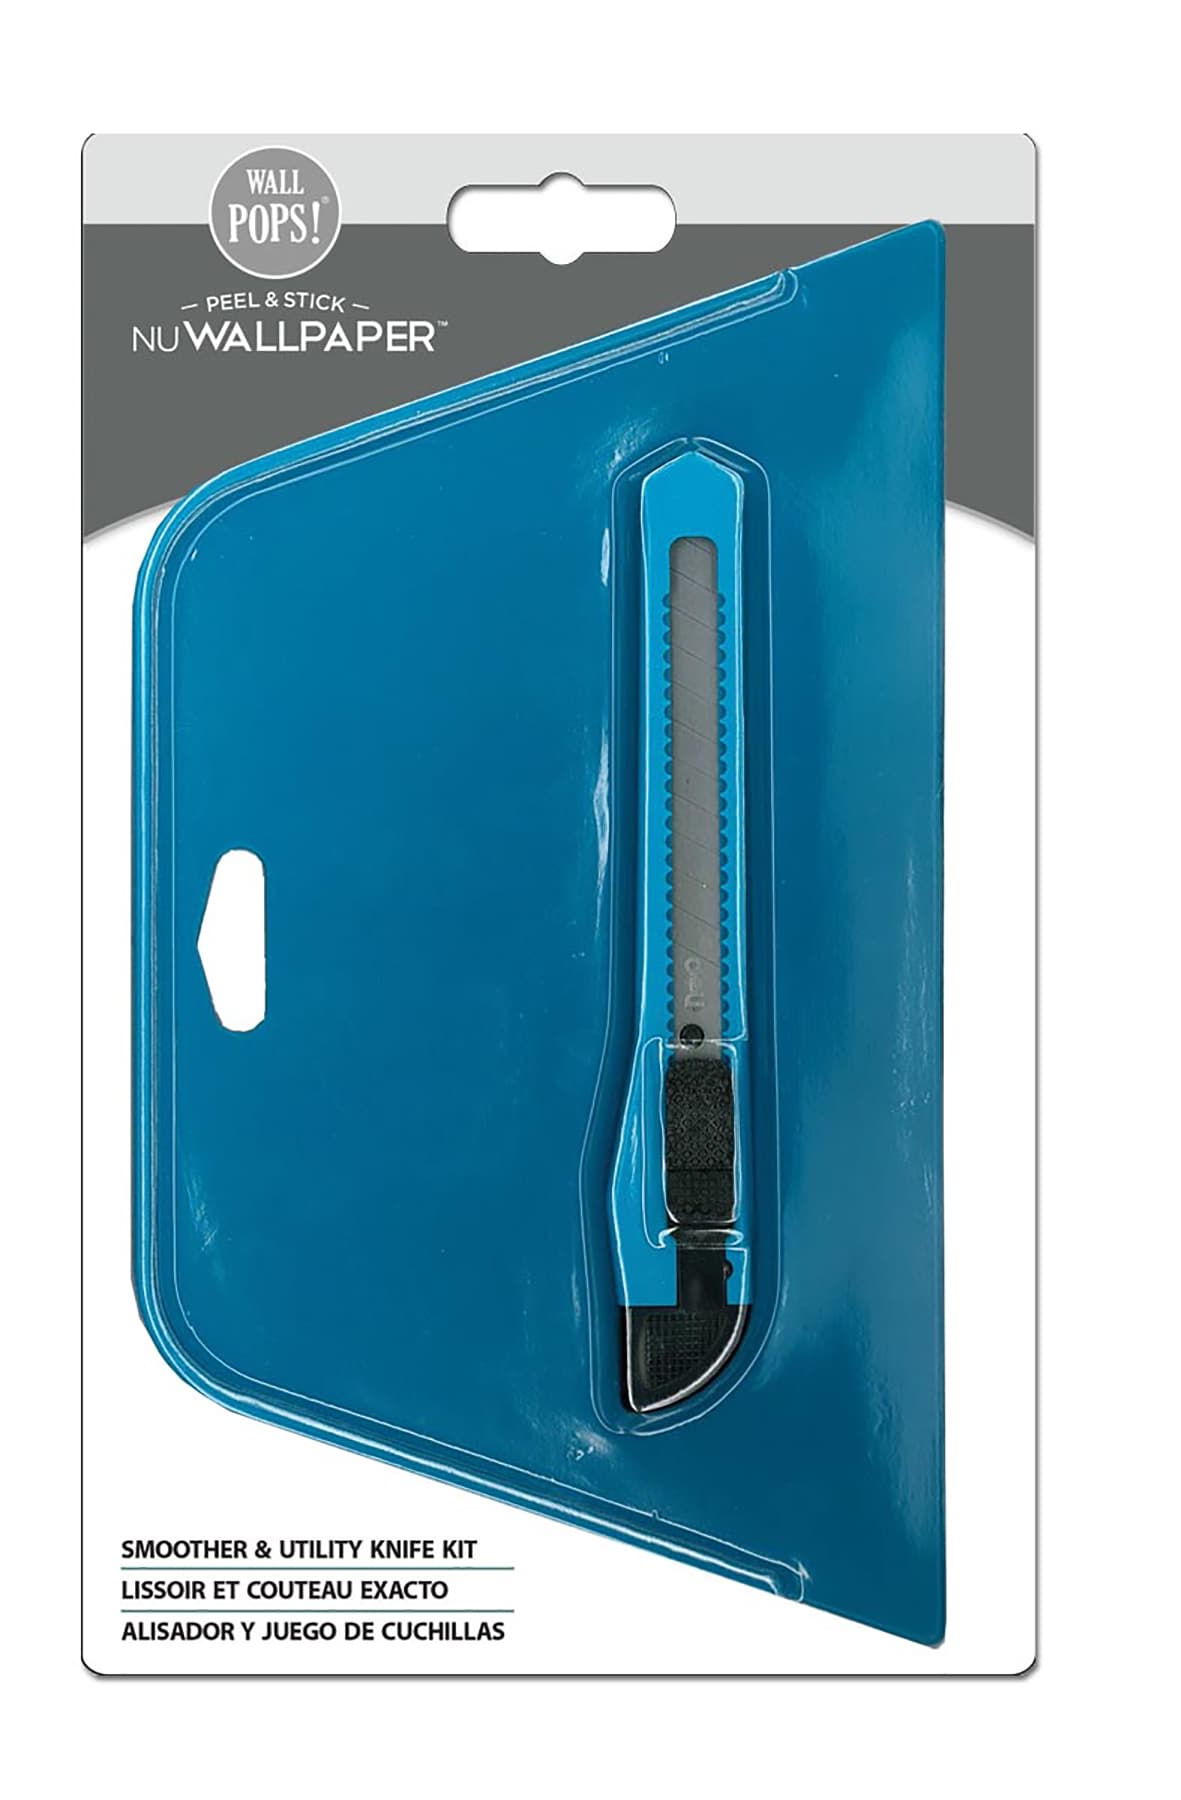 NuWallpaper Multi-purpose Wallpaper Application Kit in the